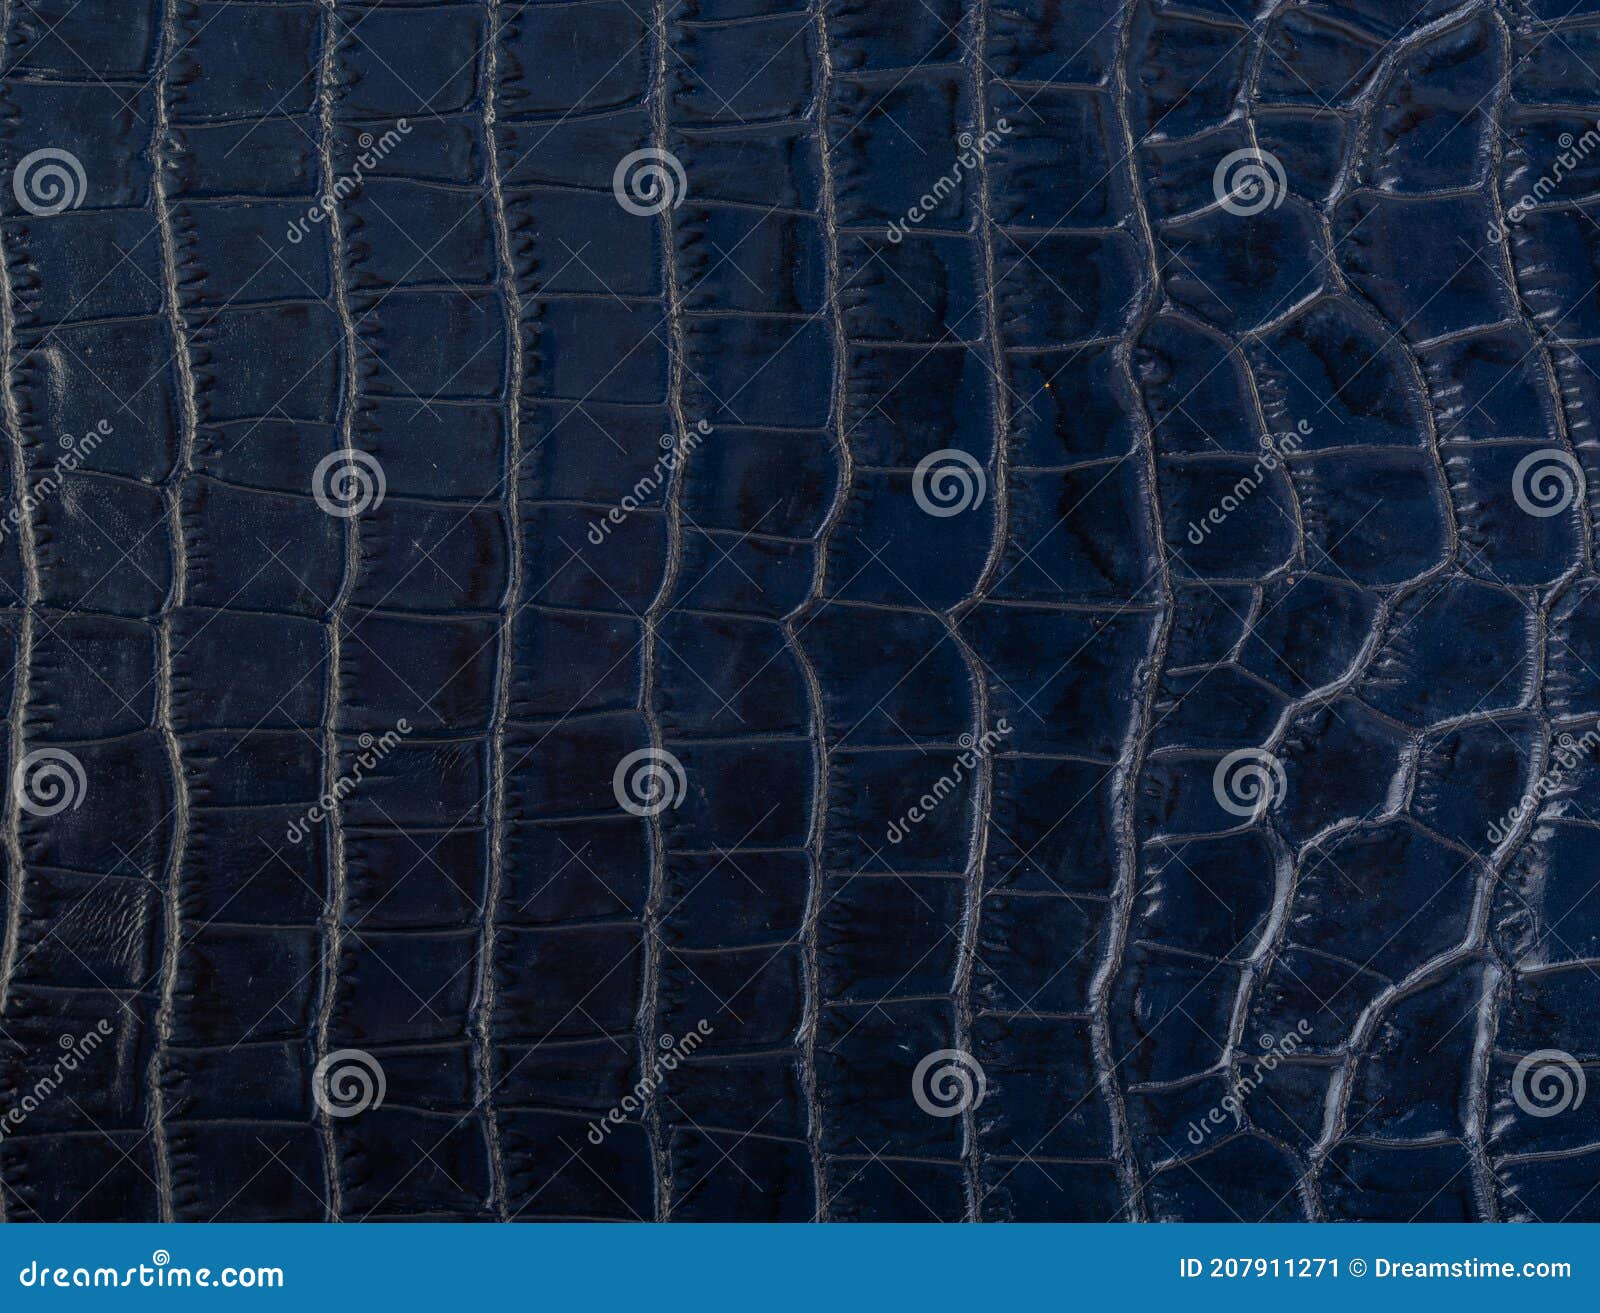 Klein Blue Crocodile Leather Texture Natural Stock Image - Image of  symmetry, monochrome: 207911271